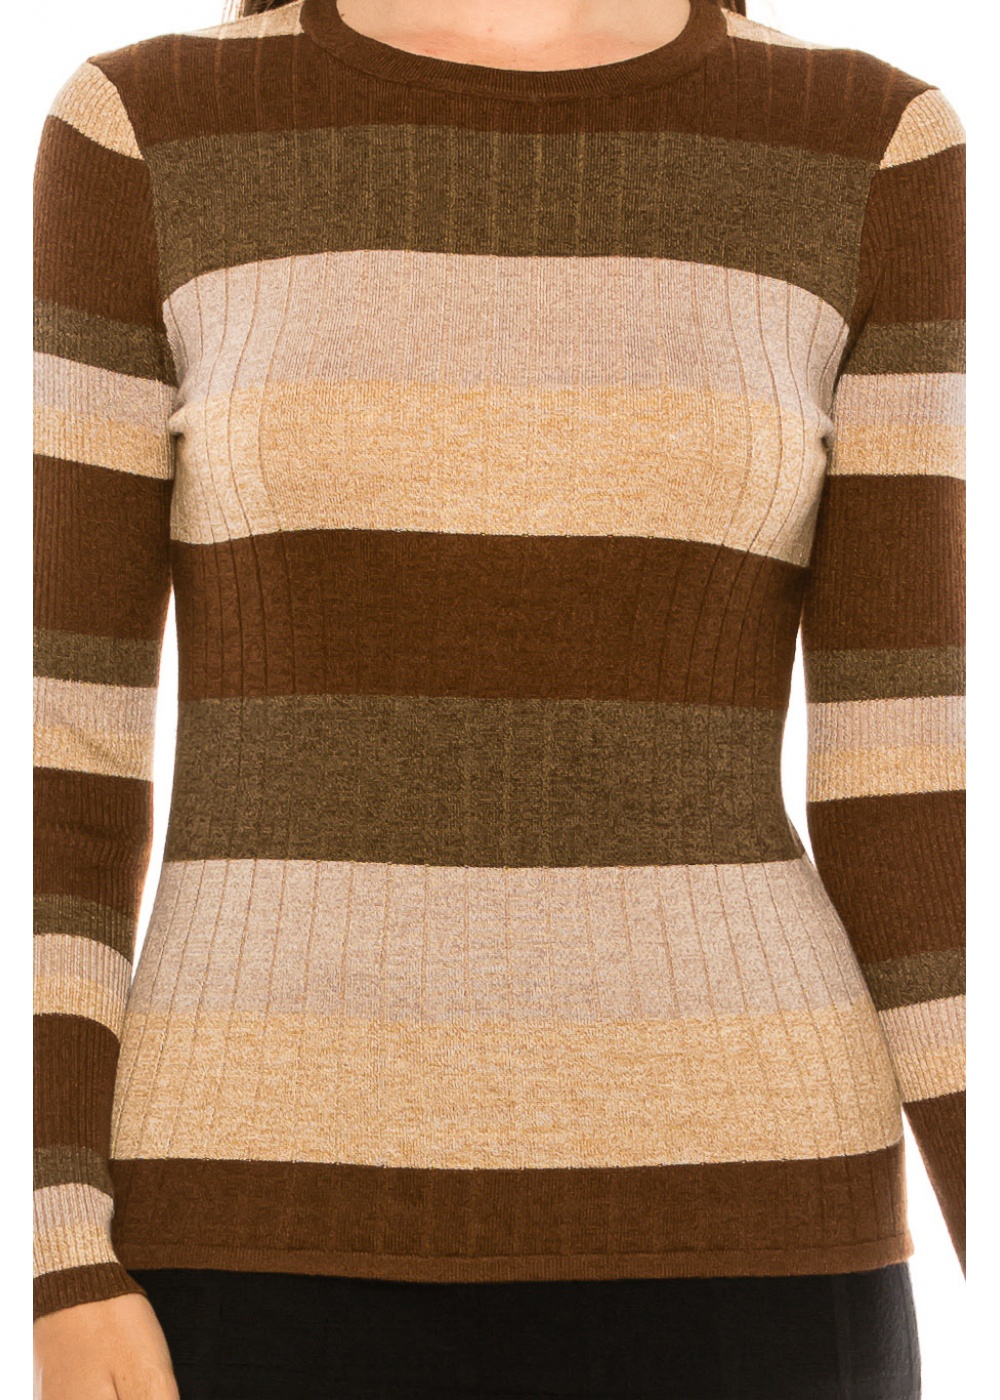 Neutral Striped Sweater